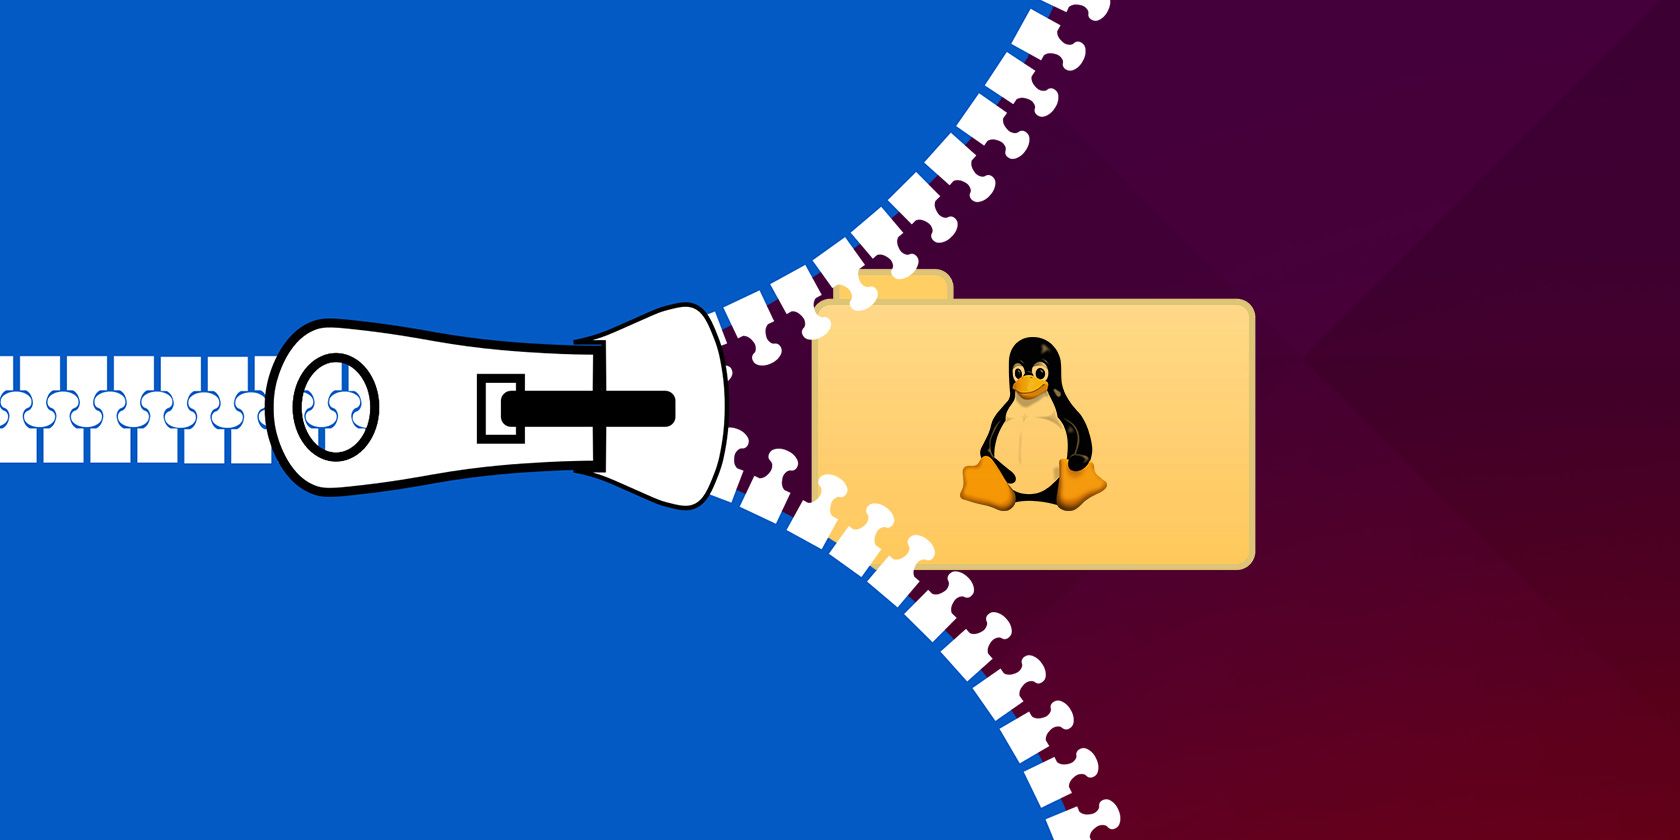 Zipper over a folder with linux penguin logo